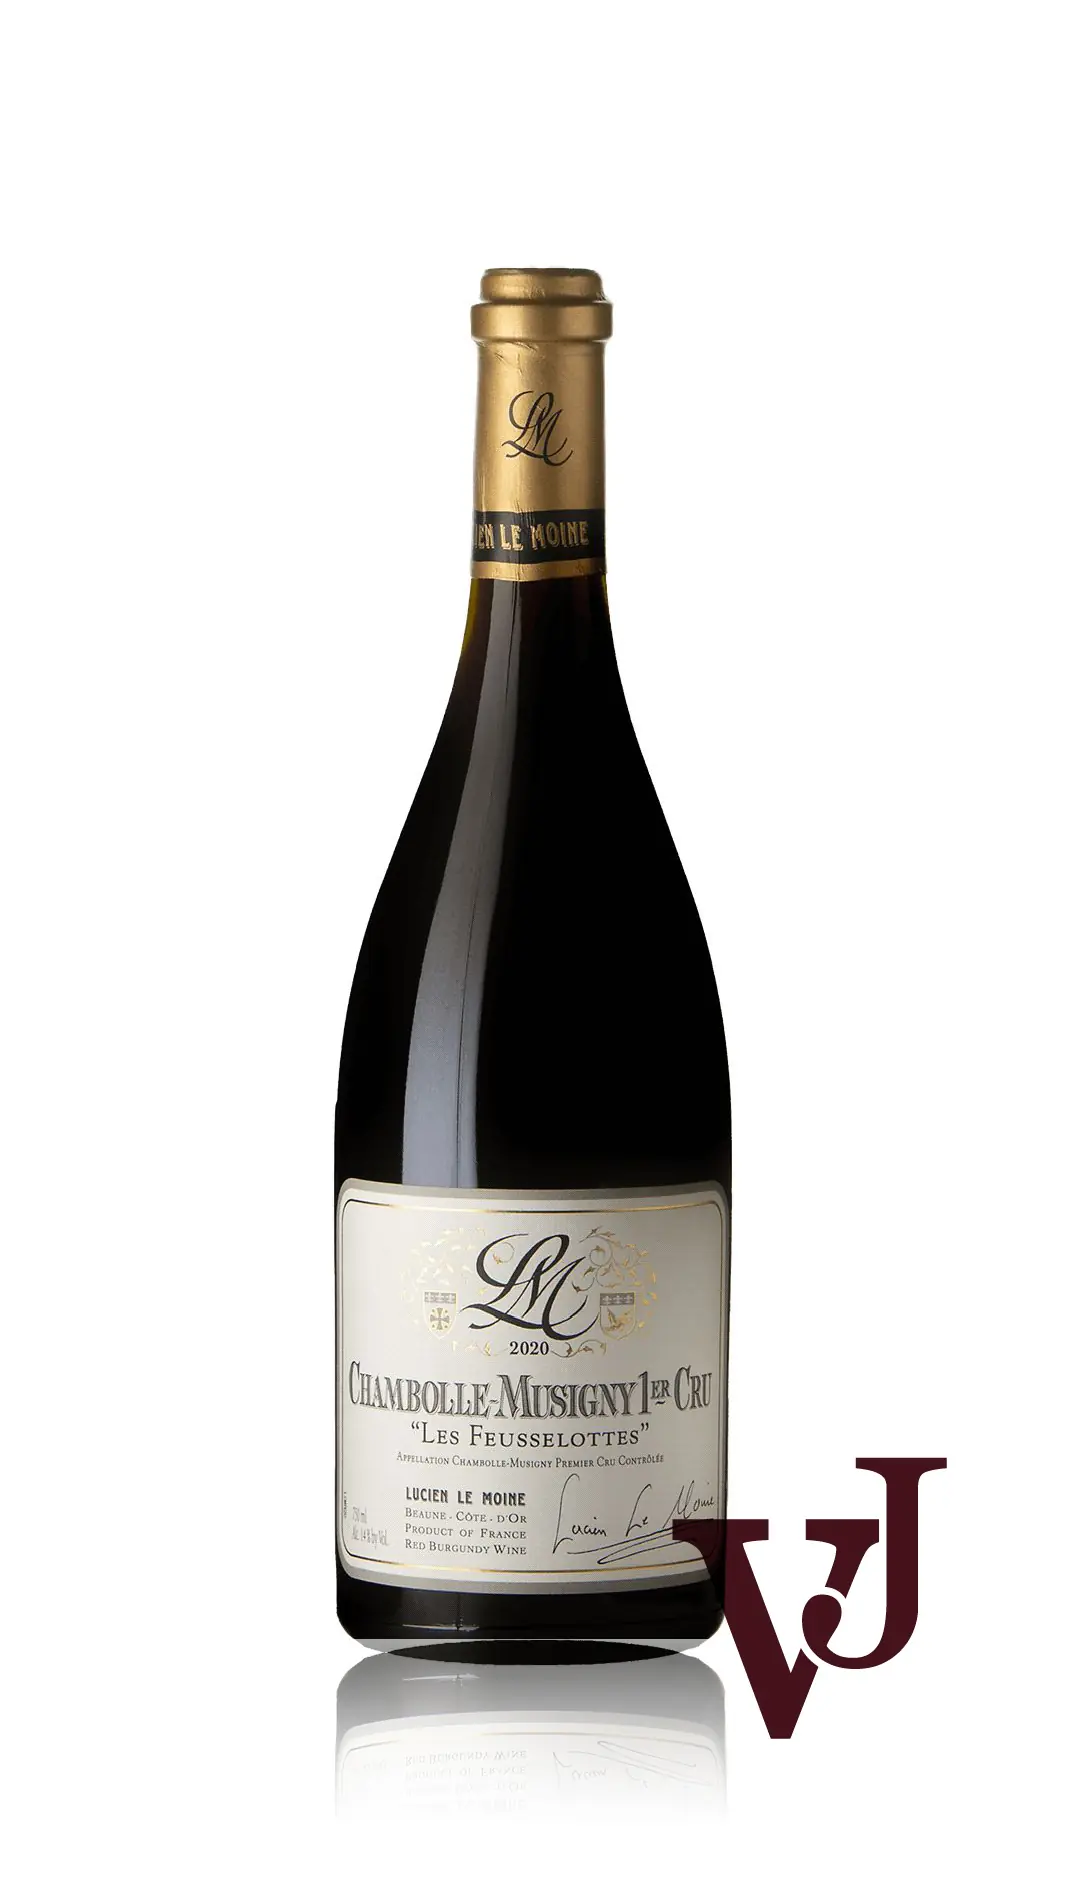 Rött vin - Chambolle-Musigny 1er Cru Les Feusselottes 2020 artikel nummer 9210601 från producenten Lucien Le Moine från Frankrike - Vinjournalen.se